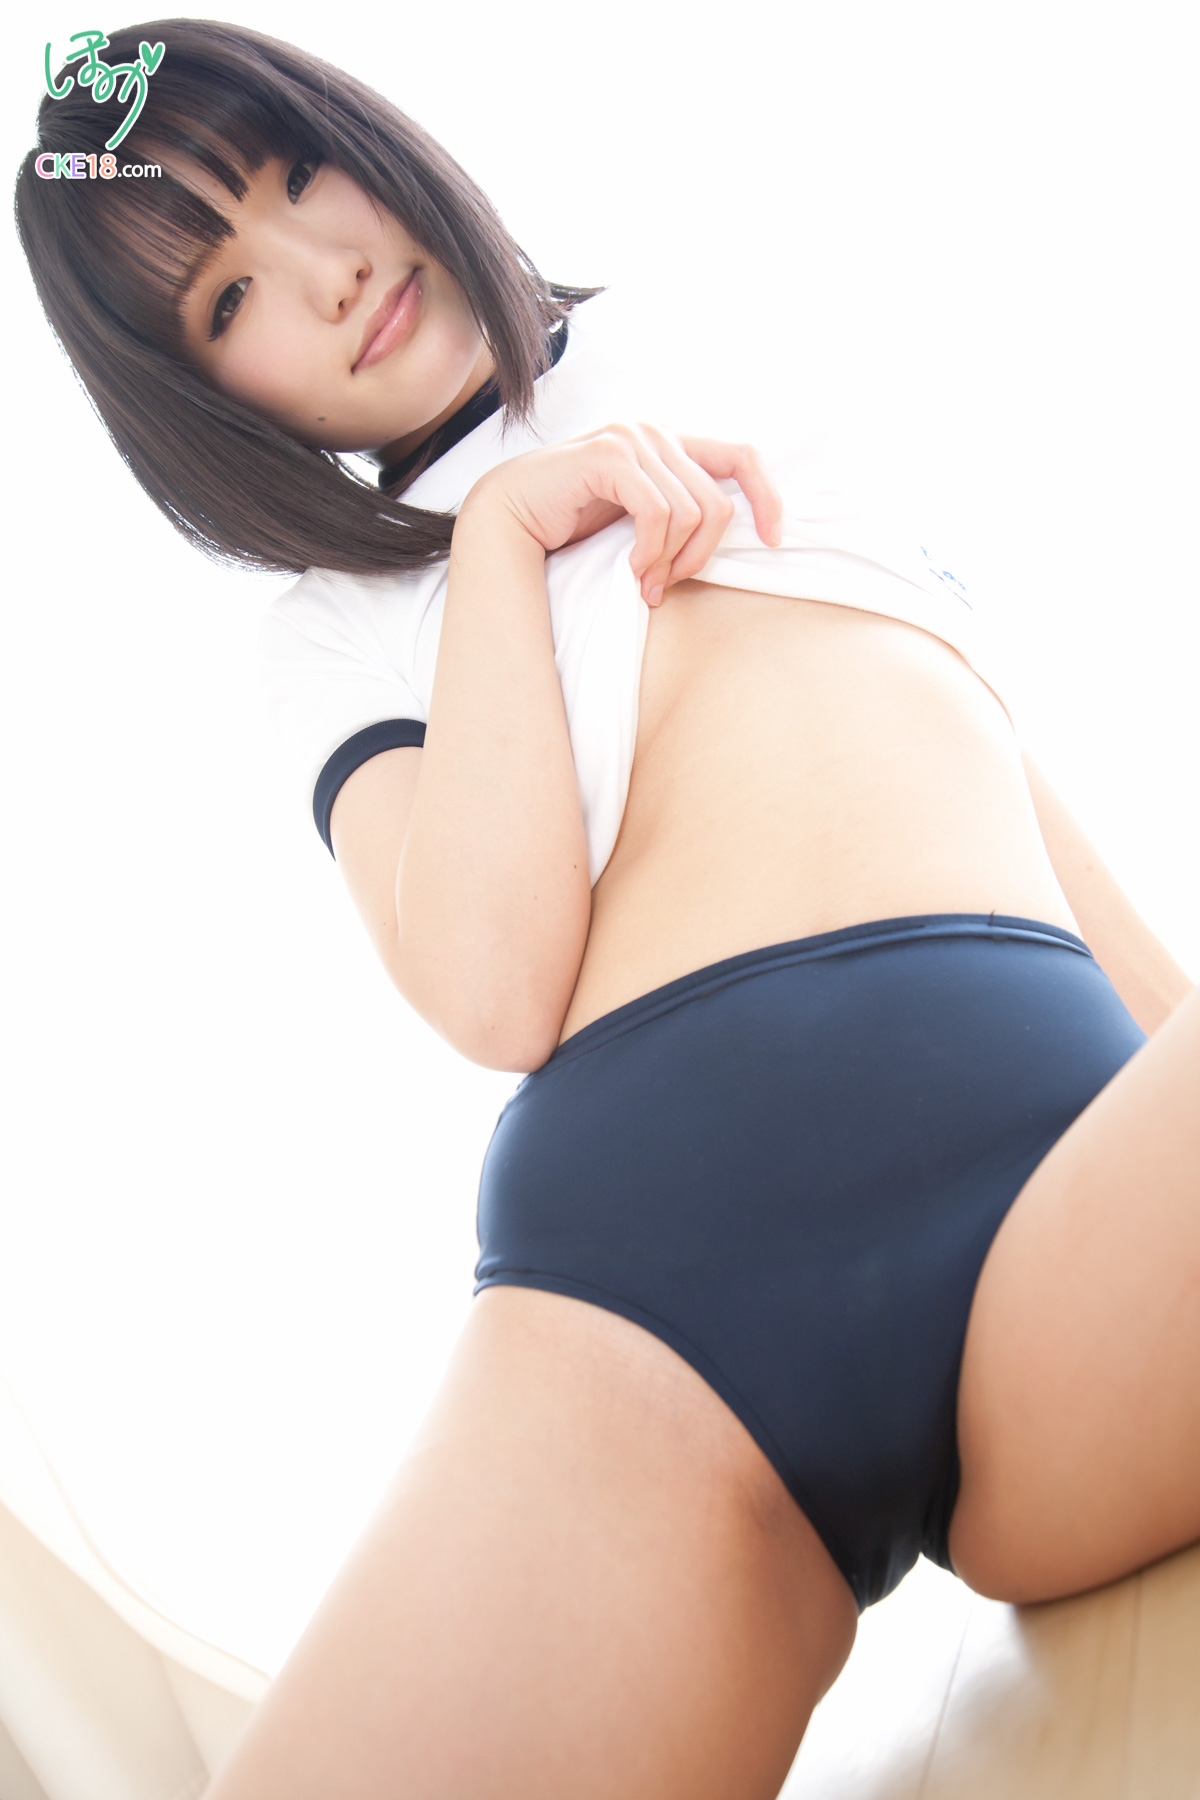 Girl In Gym Shorts Porn - Japanese teen cutie Honoka gets sassy in her gym shorts ...